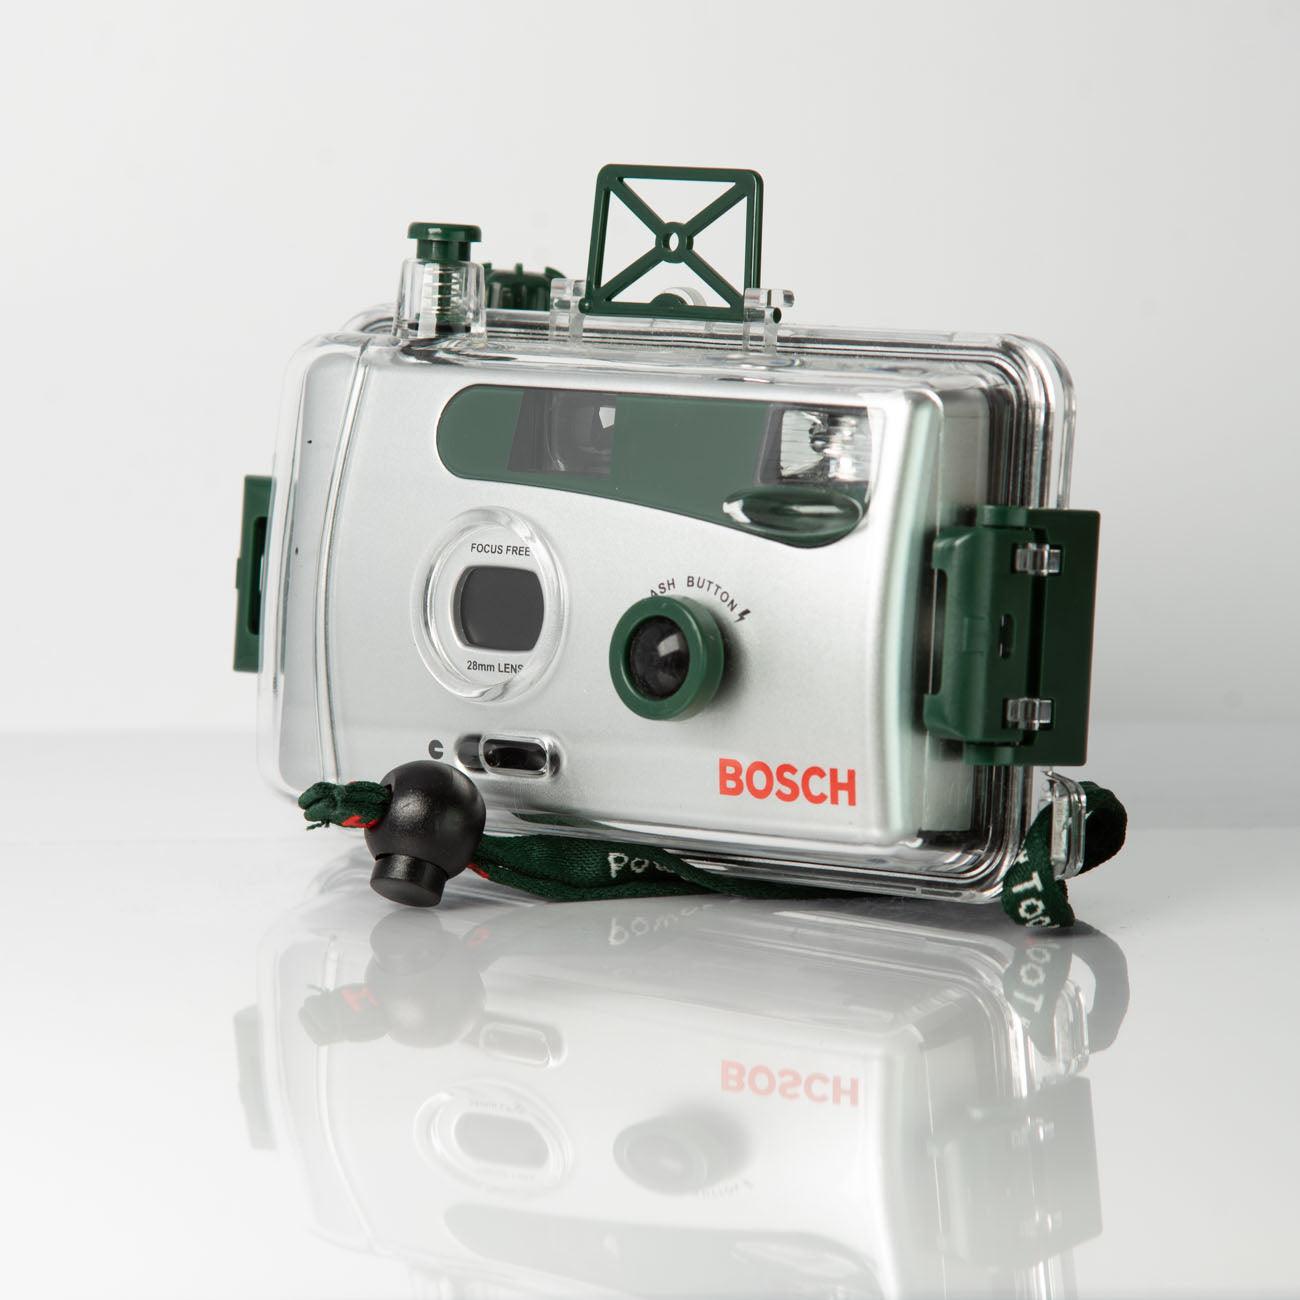 Bosch VOT-320V009H 320 x 240 Outdoor Thermal IP Camera 9mm Lens